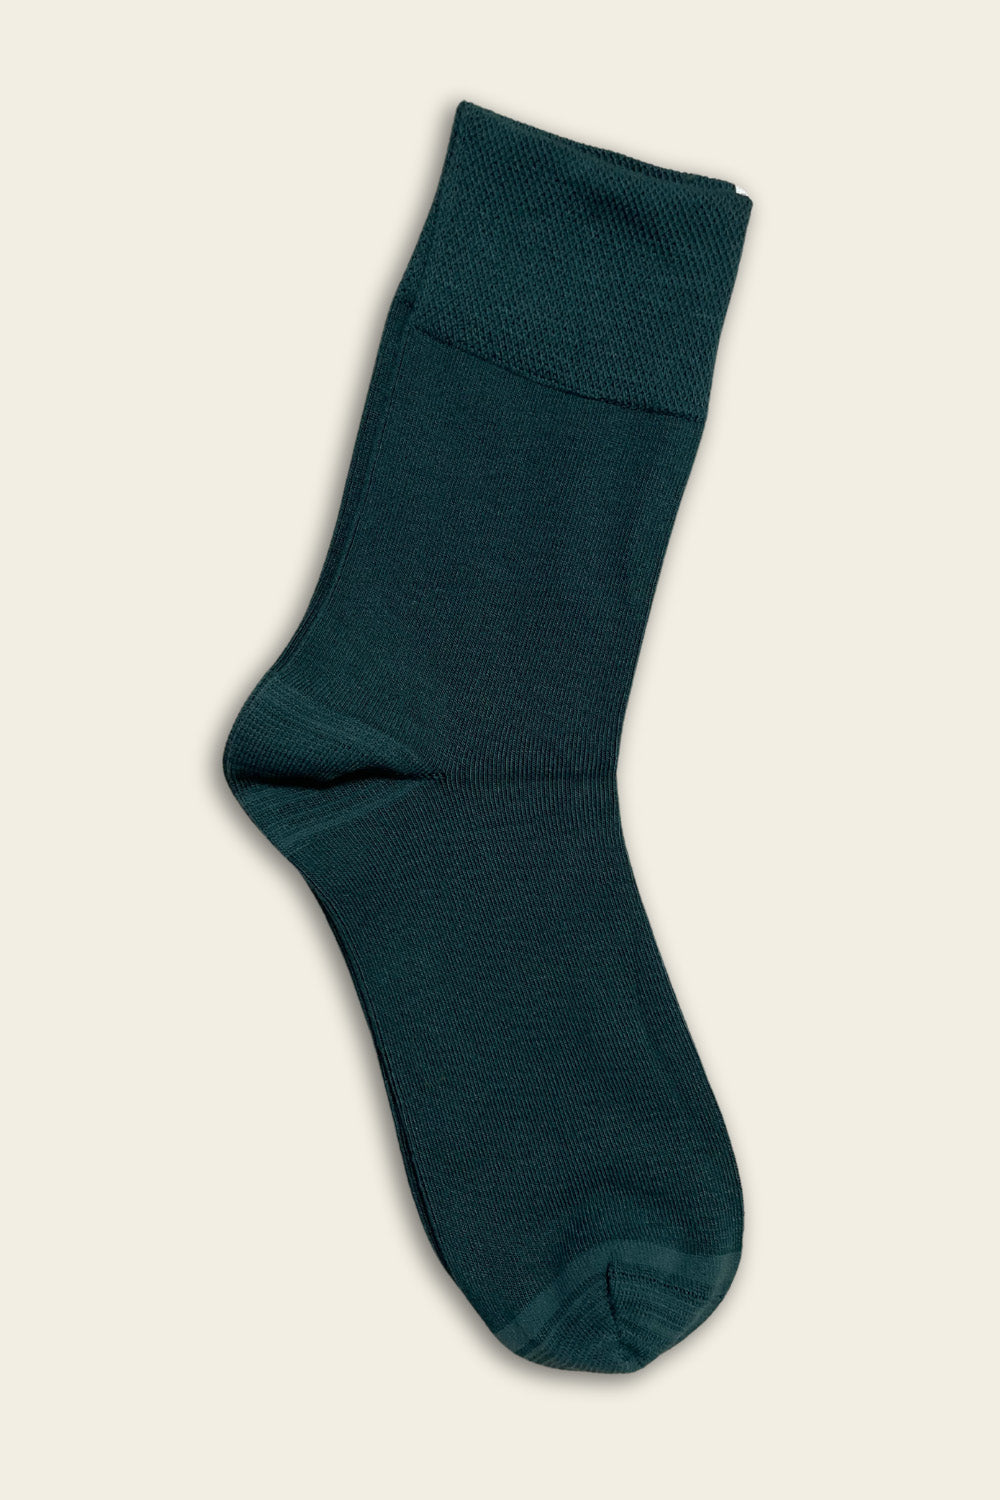 Seamless Bamboo Socks - Red, Navy Blue, Green - 6 pairs